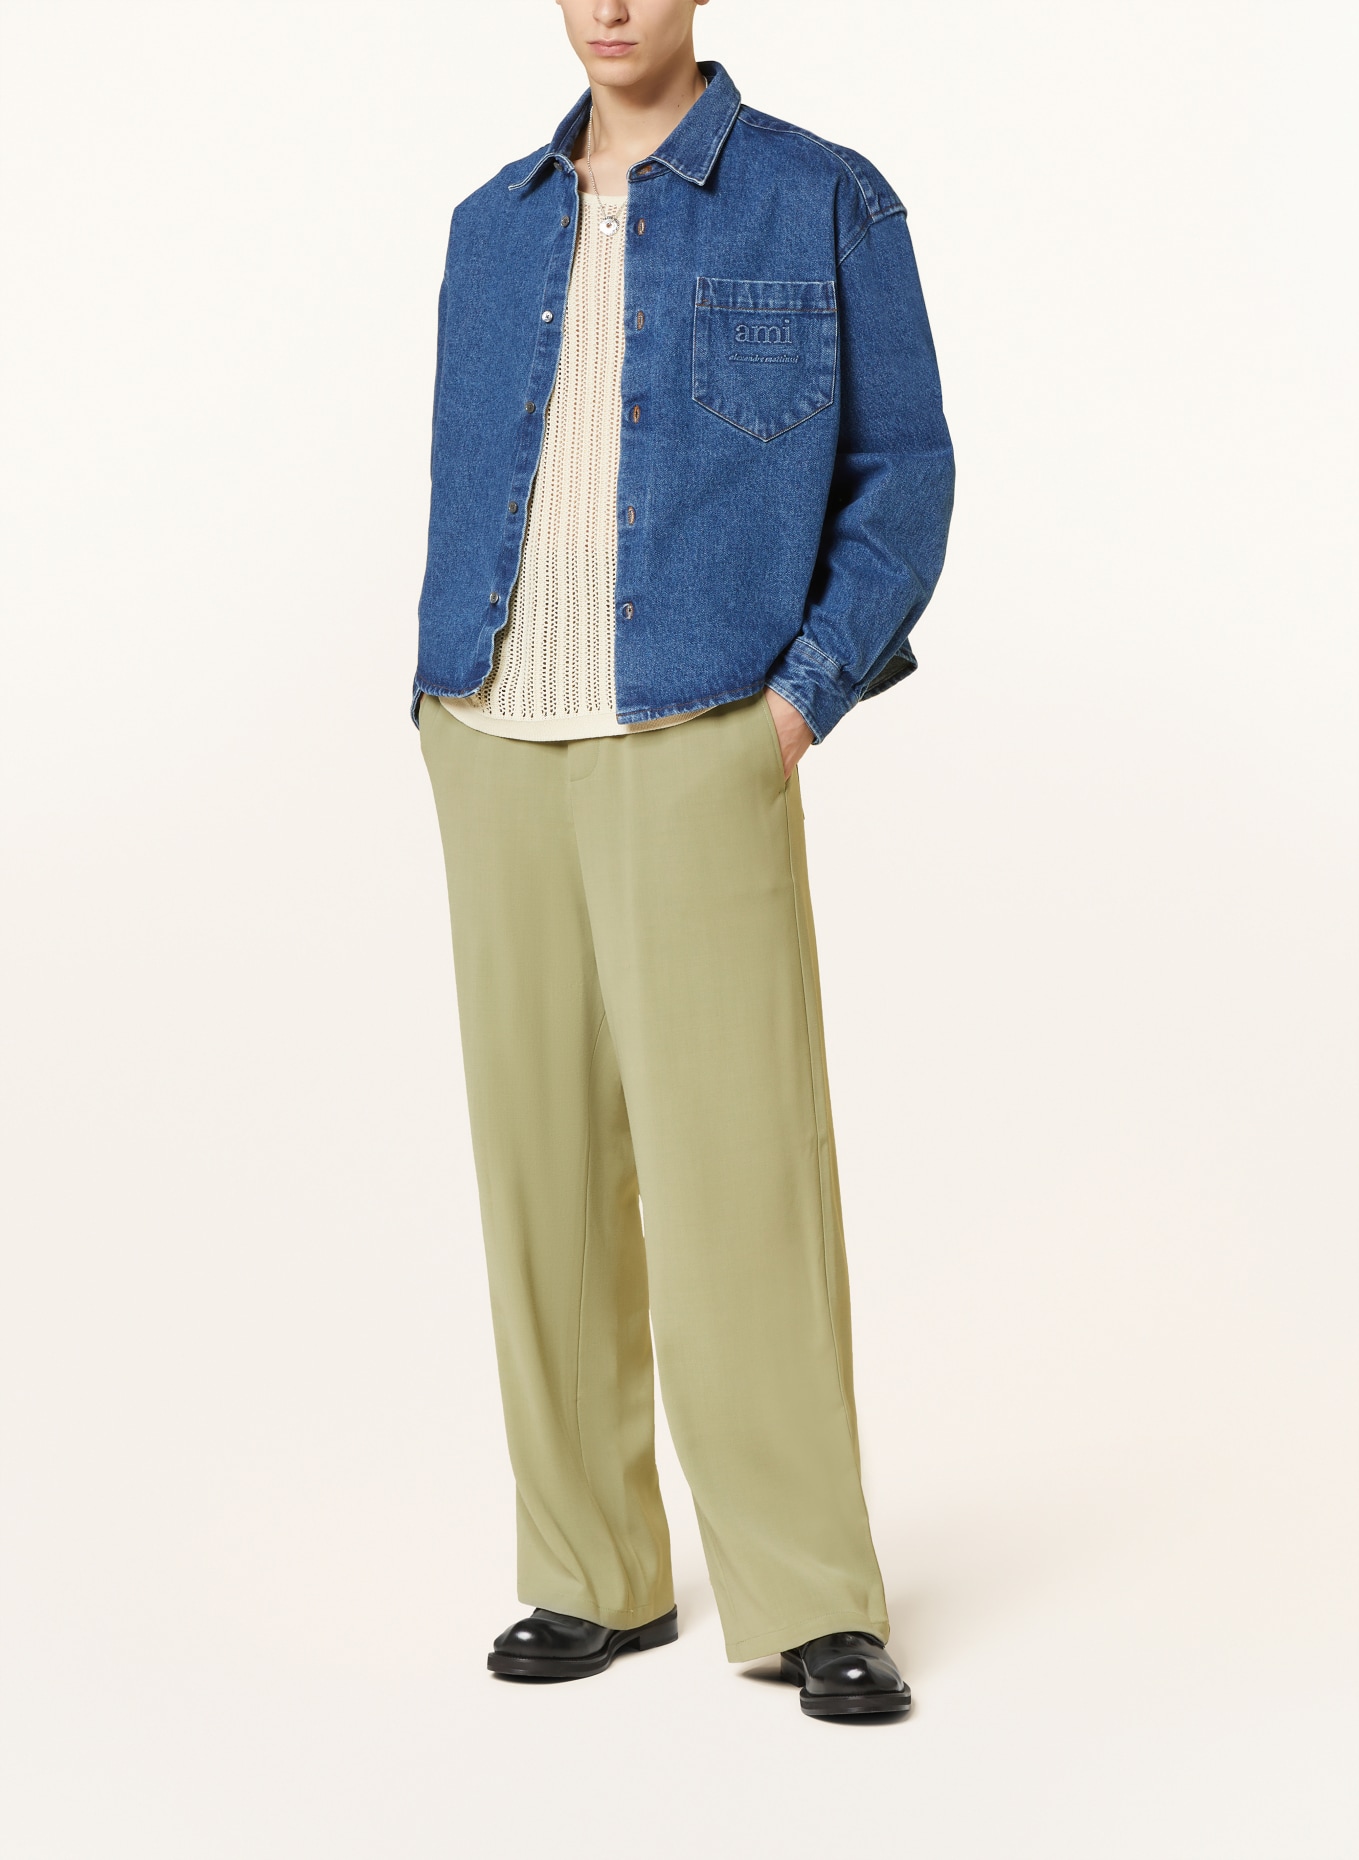 AMI PARIS Jeans-Overjacket, Farbe: BLAU (Bild 2)